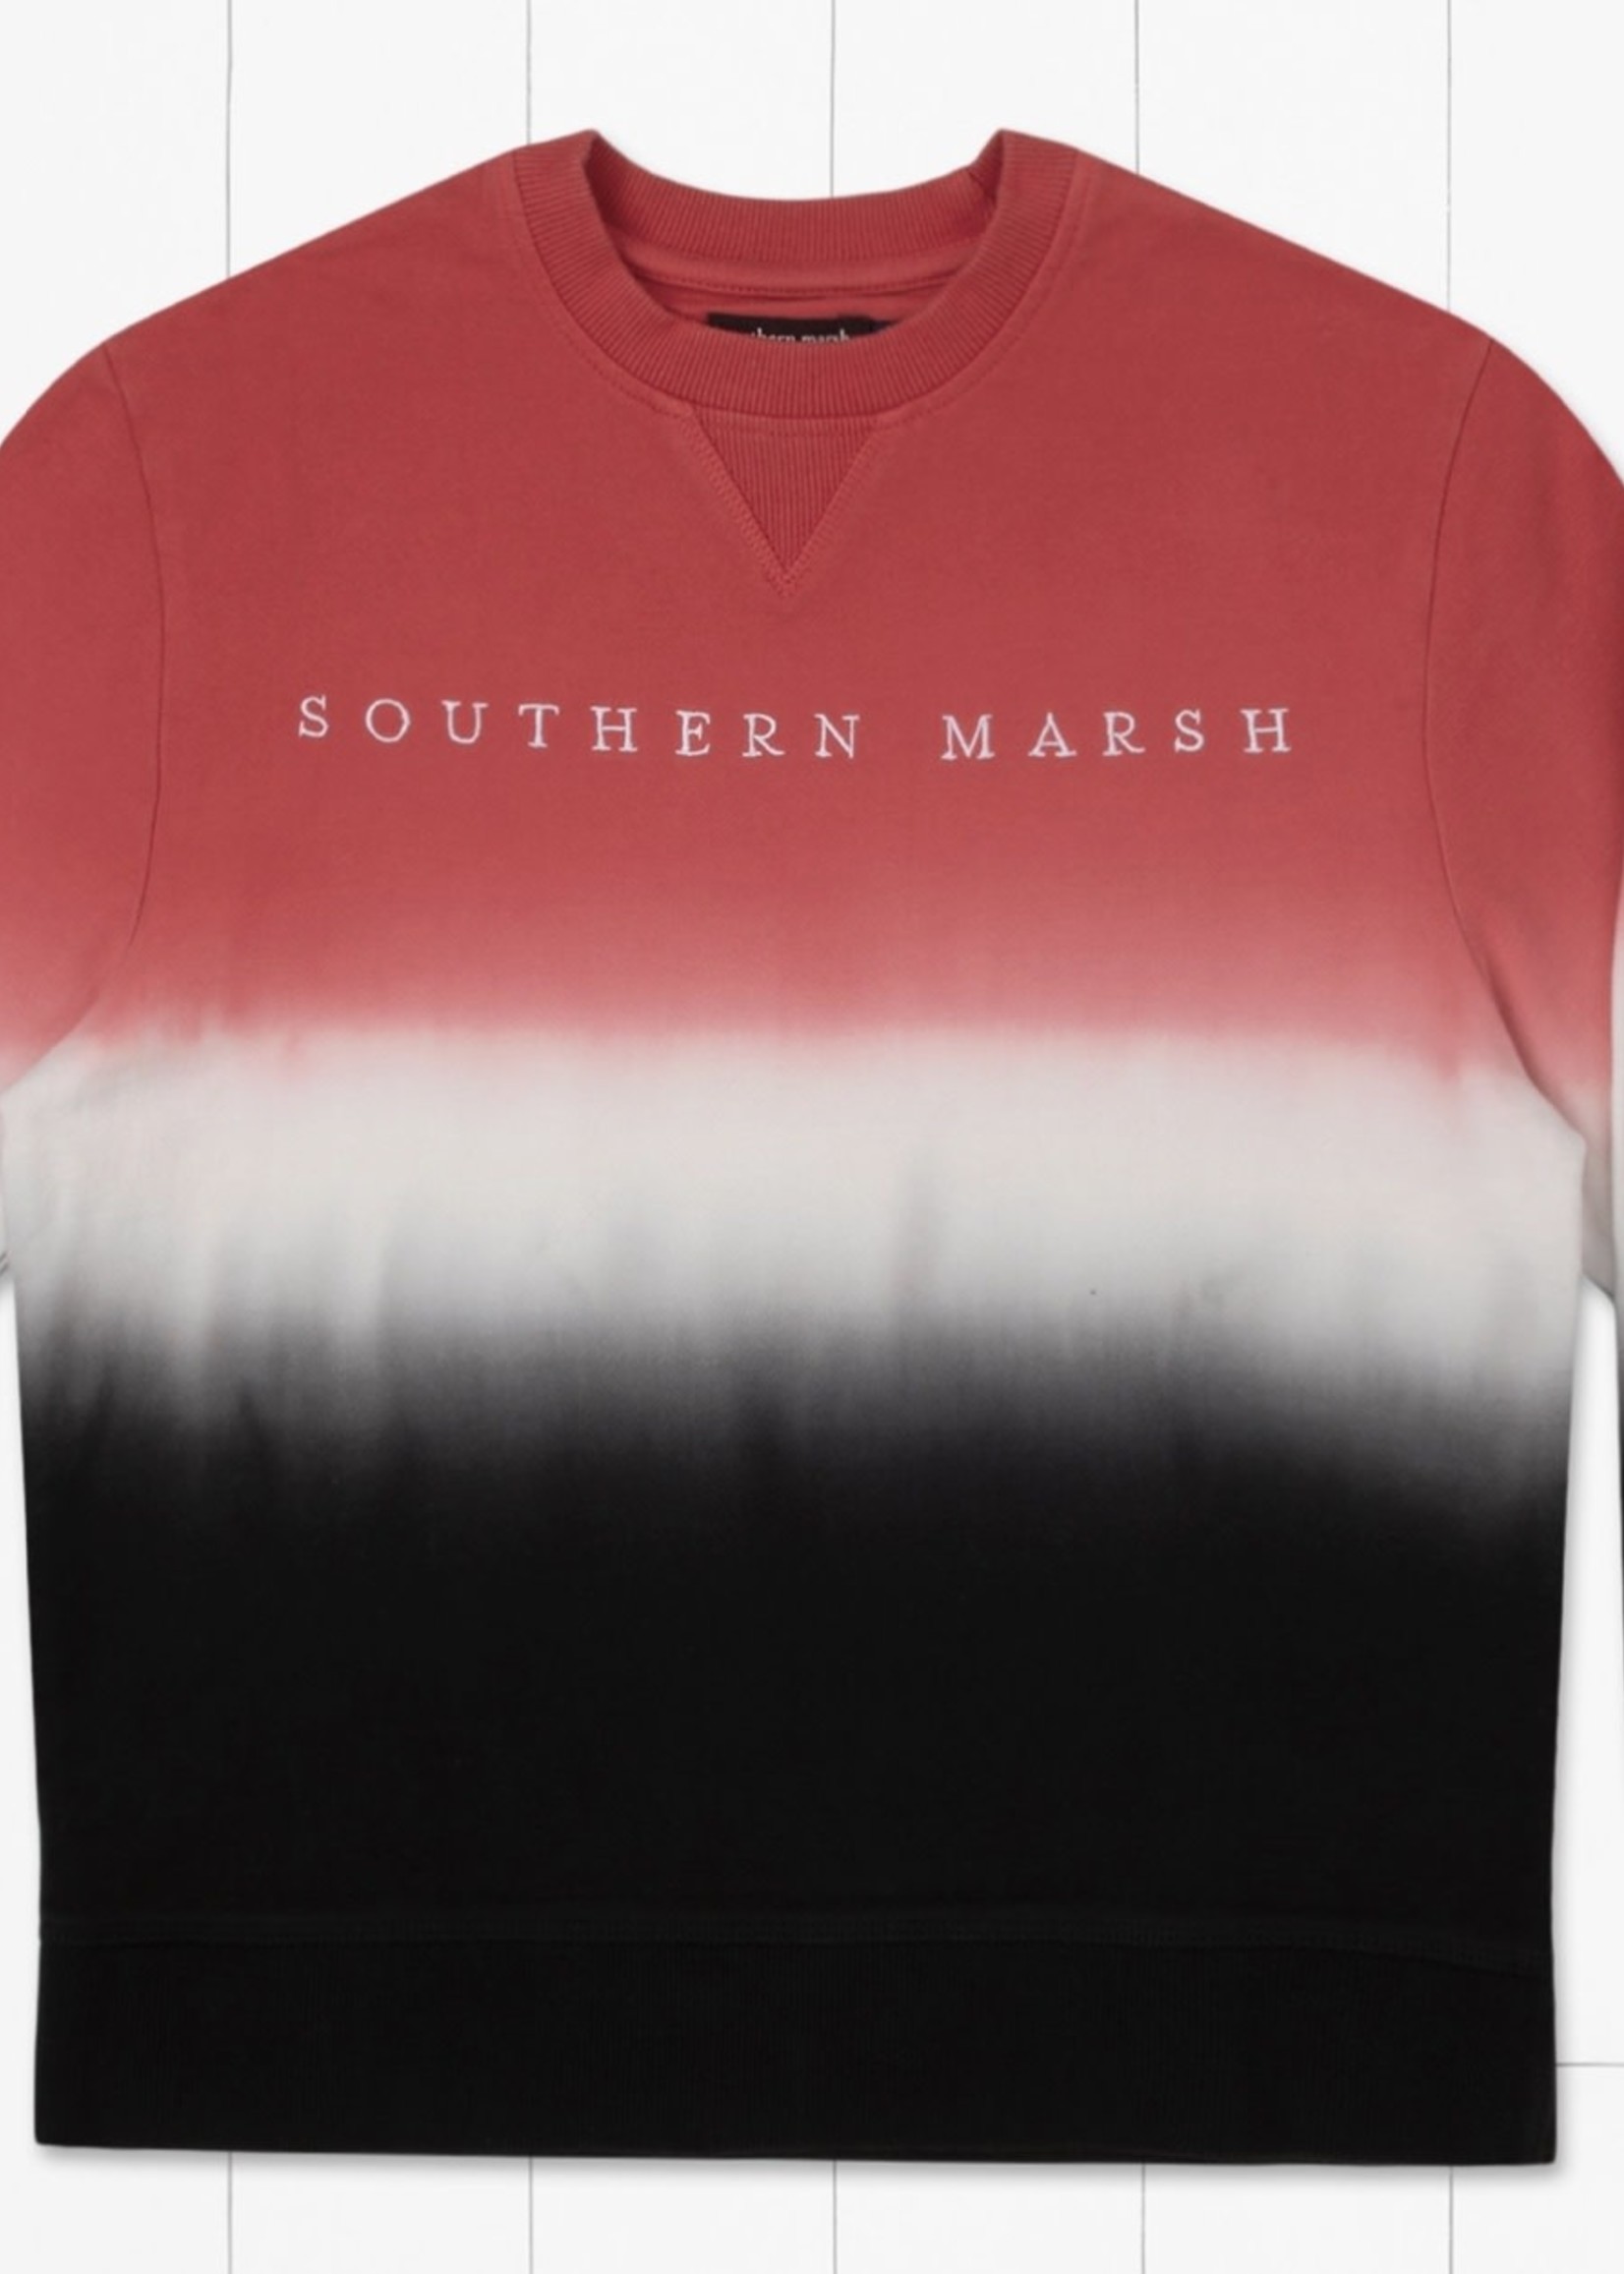 Southern Marsh Southern Marsh Alumni Dip Dye Sweatshirt